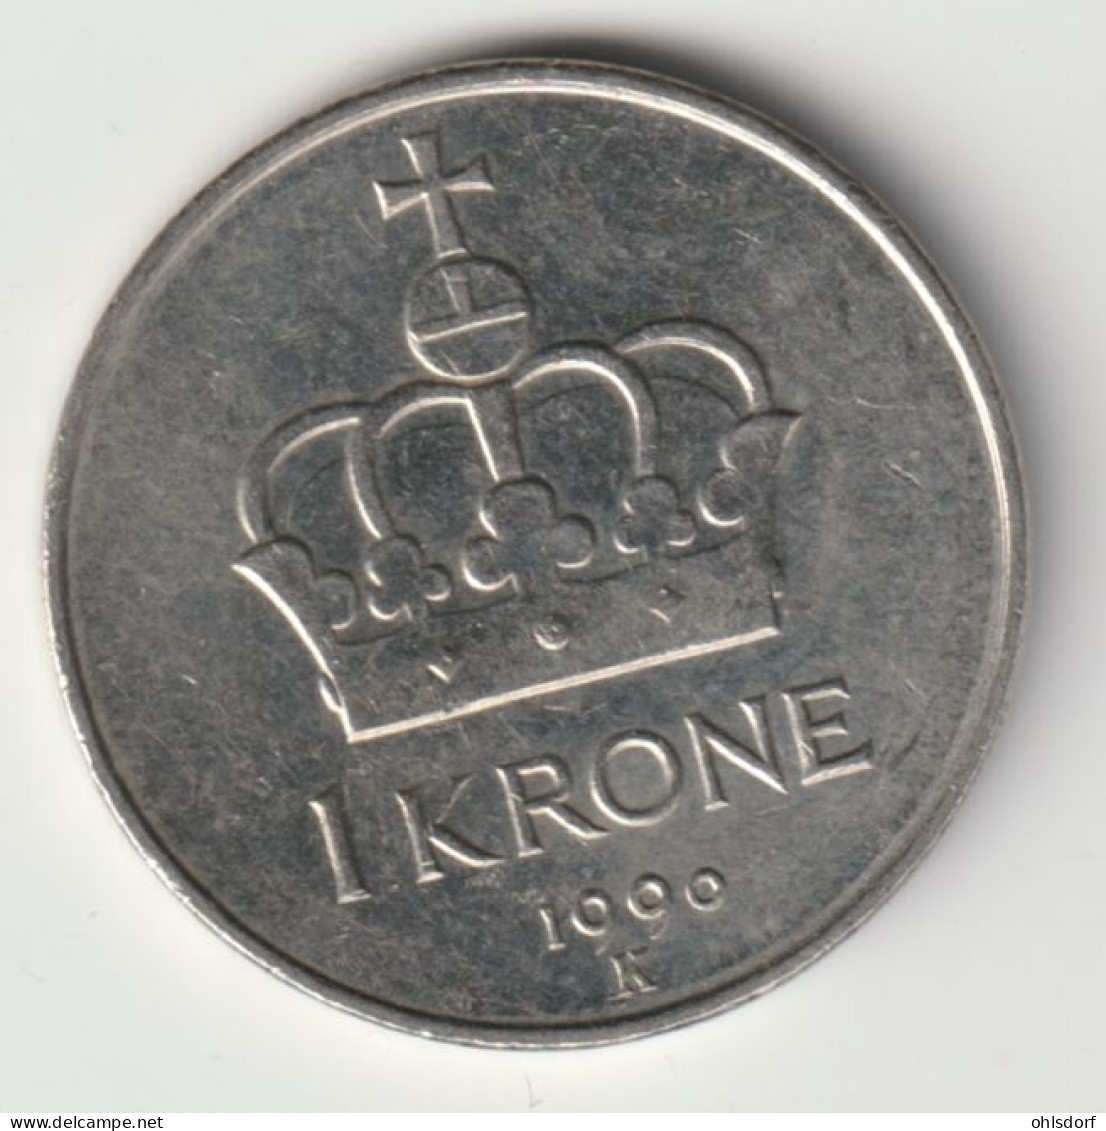 NORGE 1990: 1 Krone, KM 419 - Norway